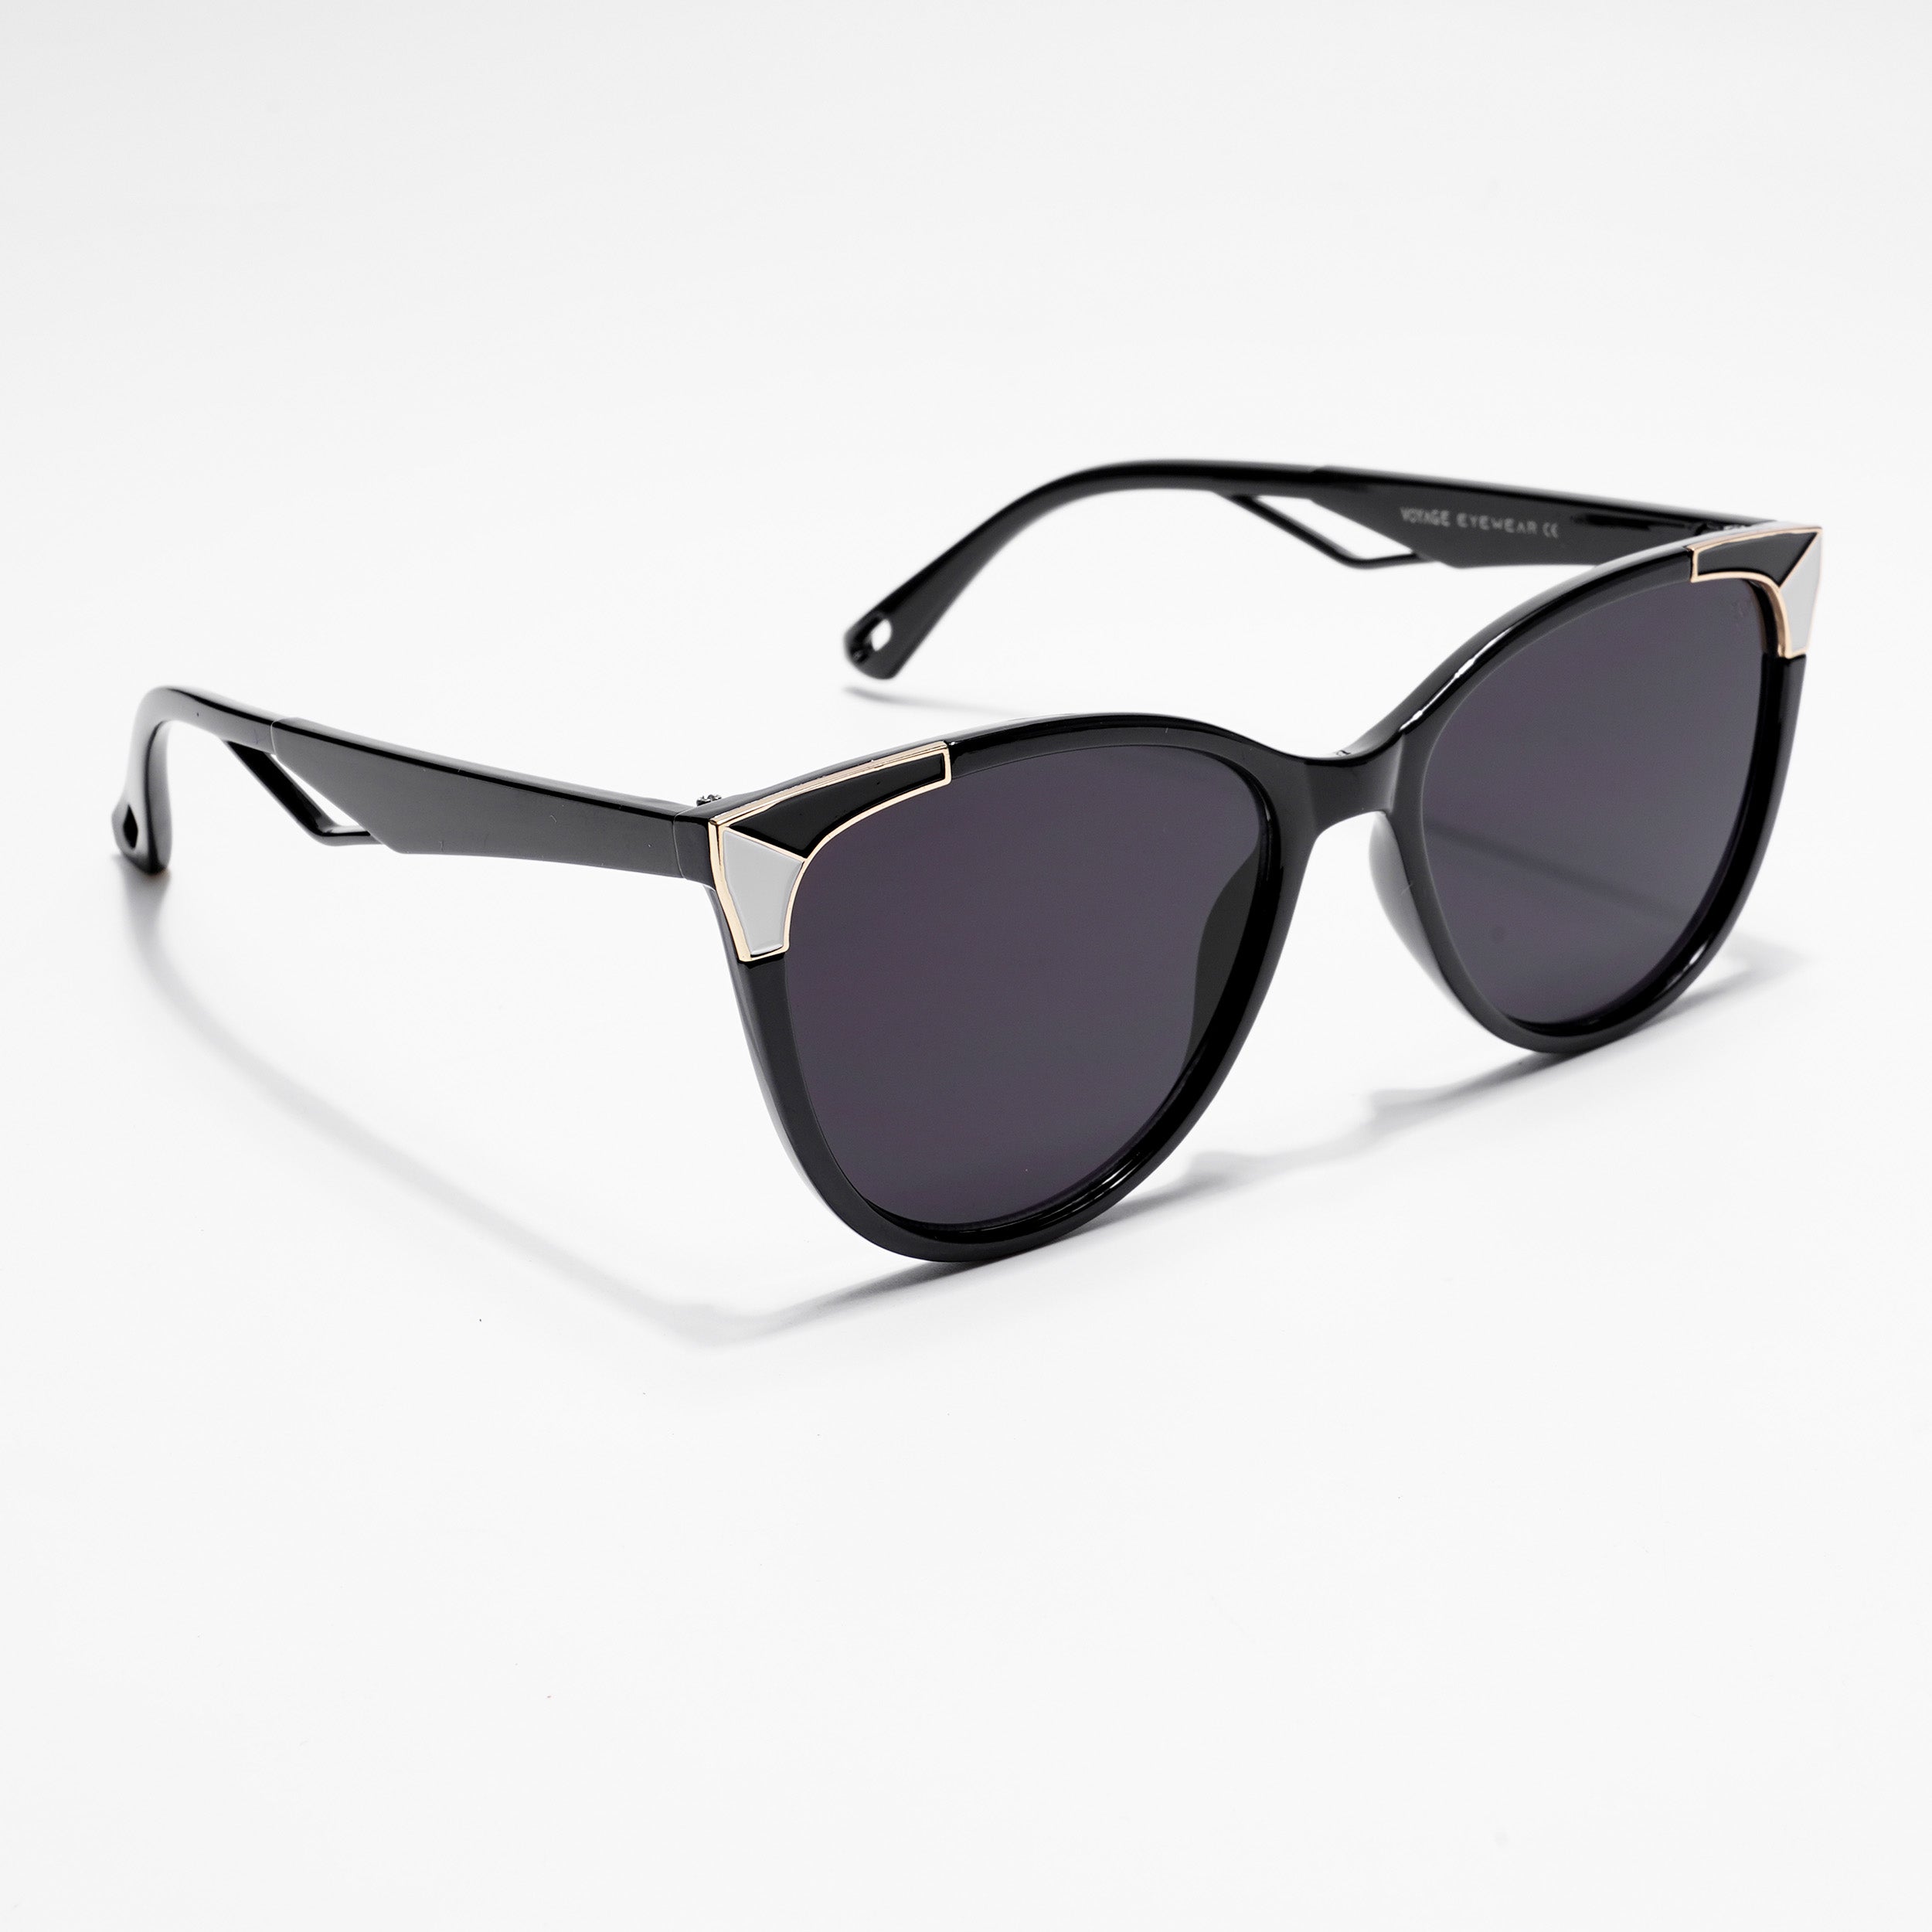 Voyage Black Cateye Sunglasses for Women - MG4228